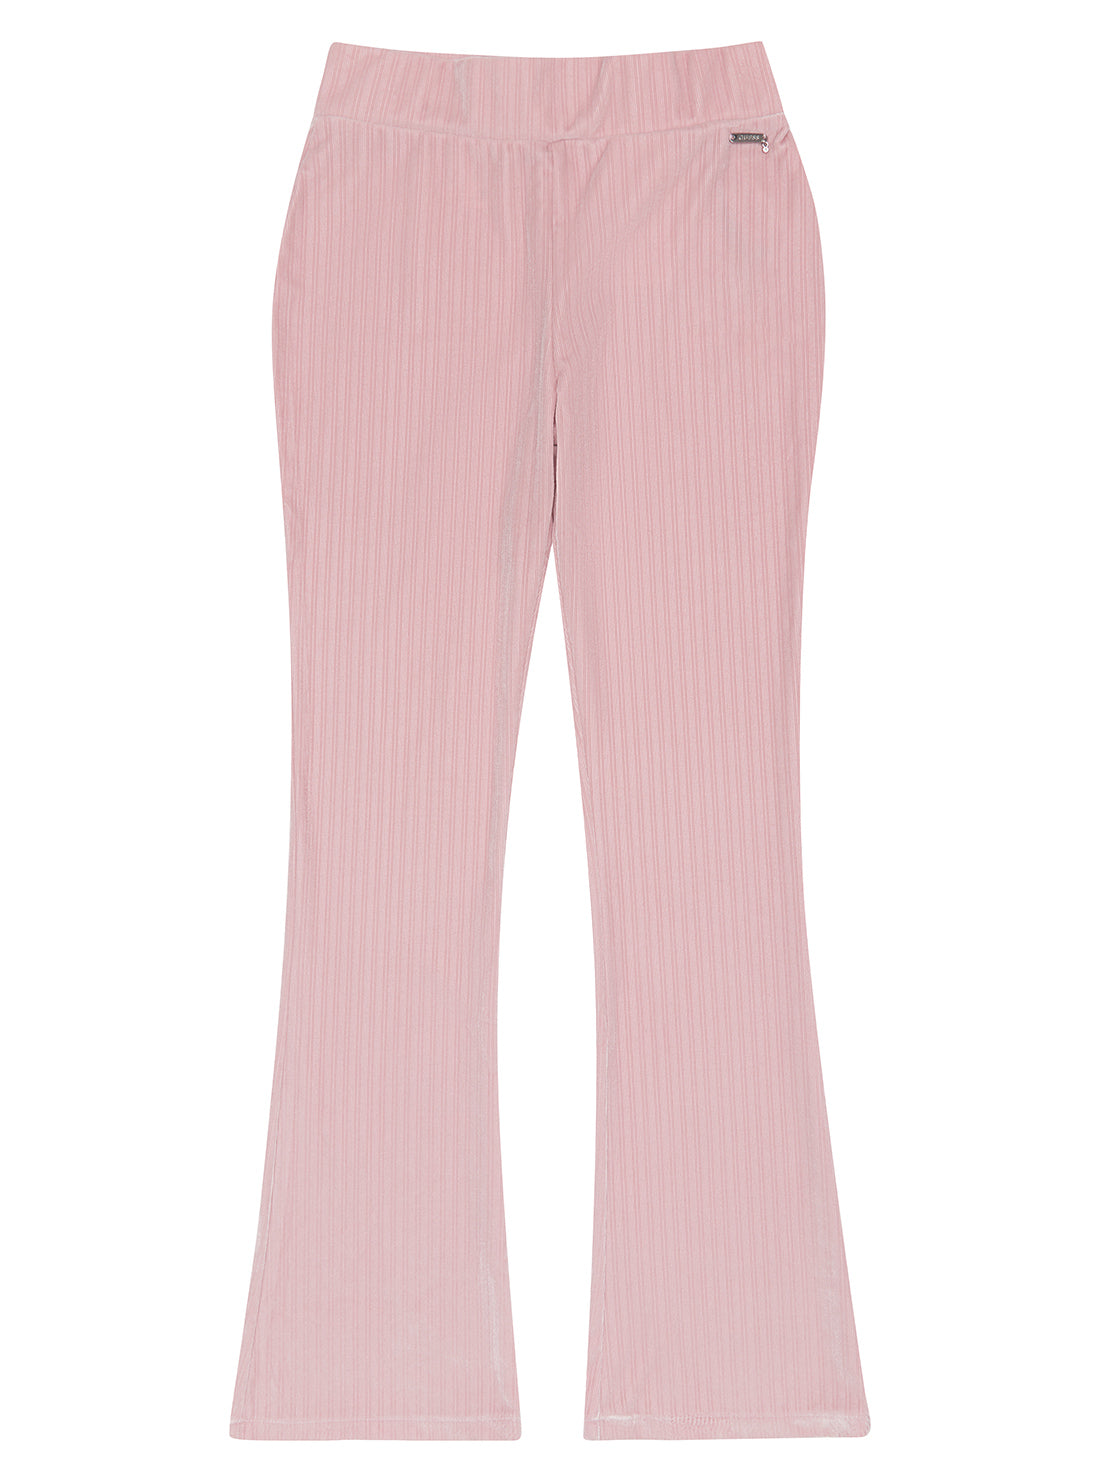 GUESS Pink Velour Long Pants (7-16) back view